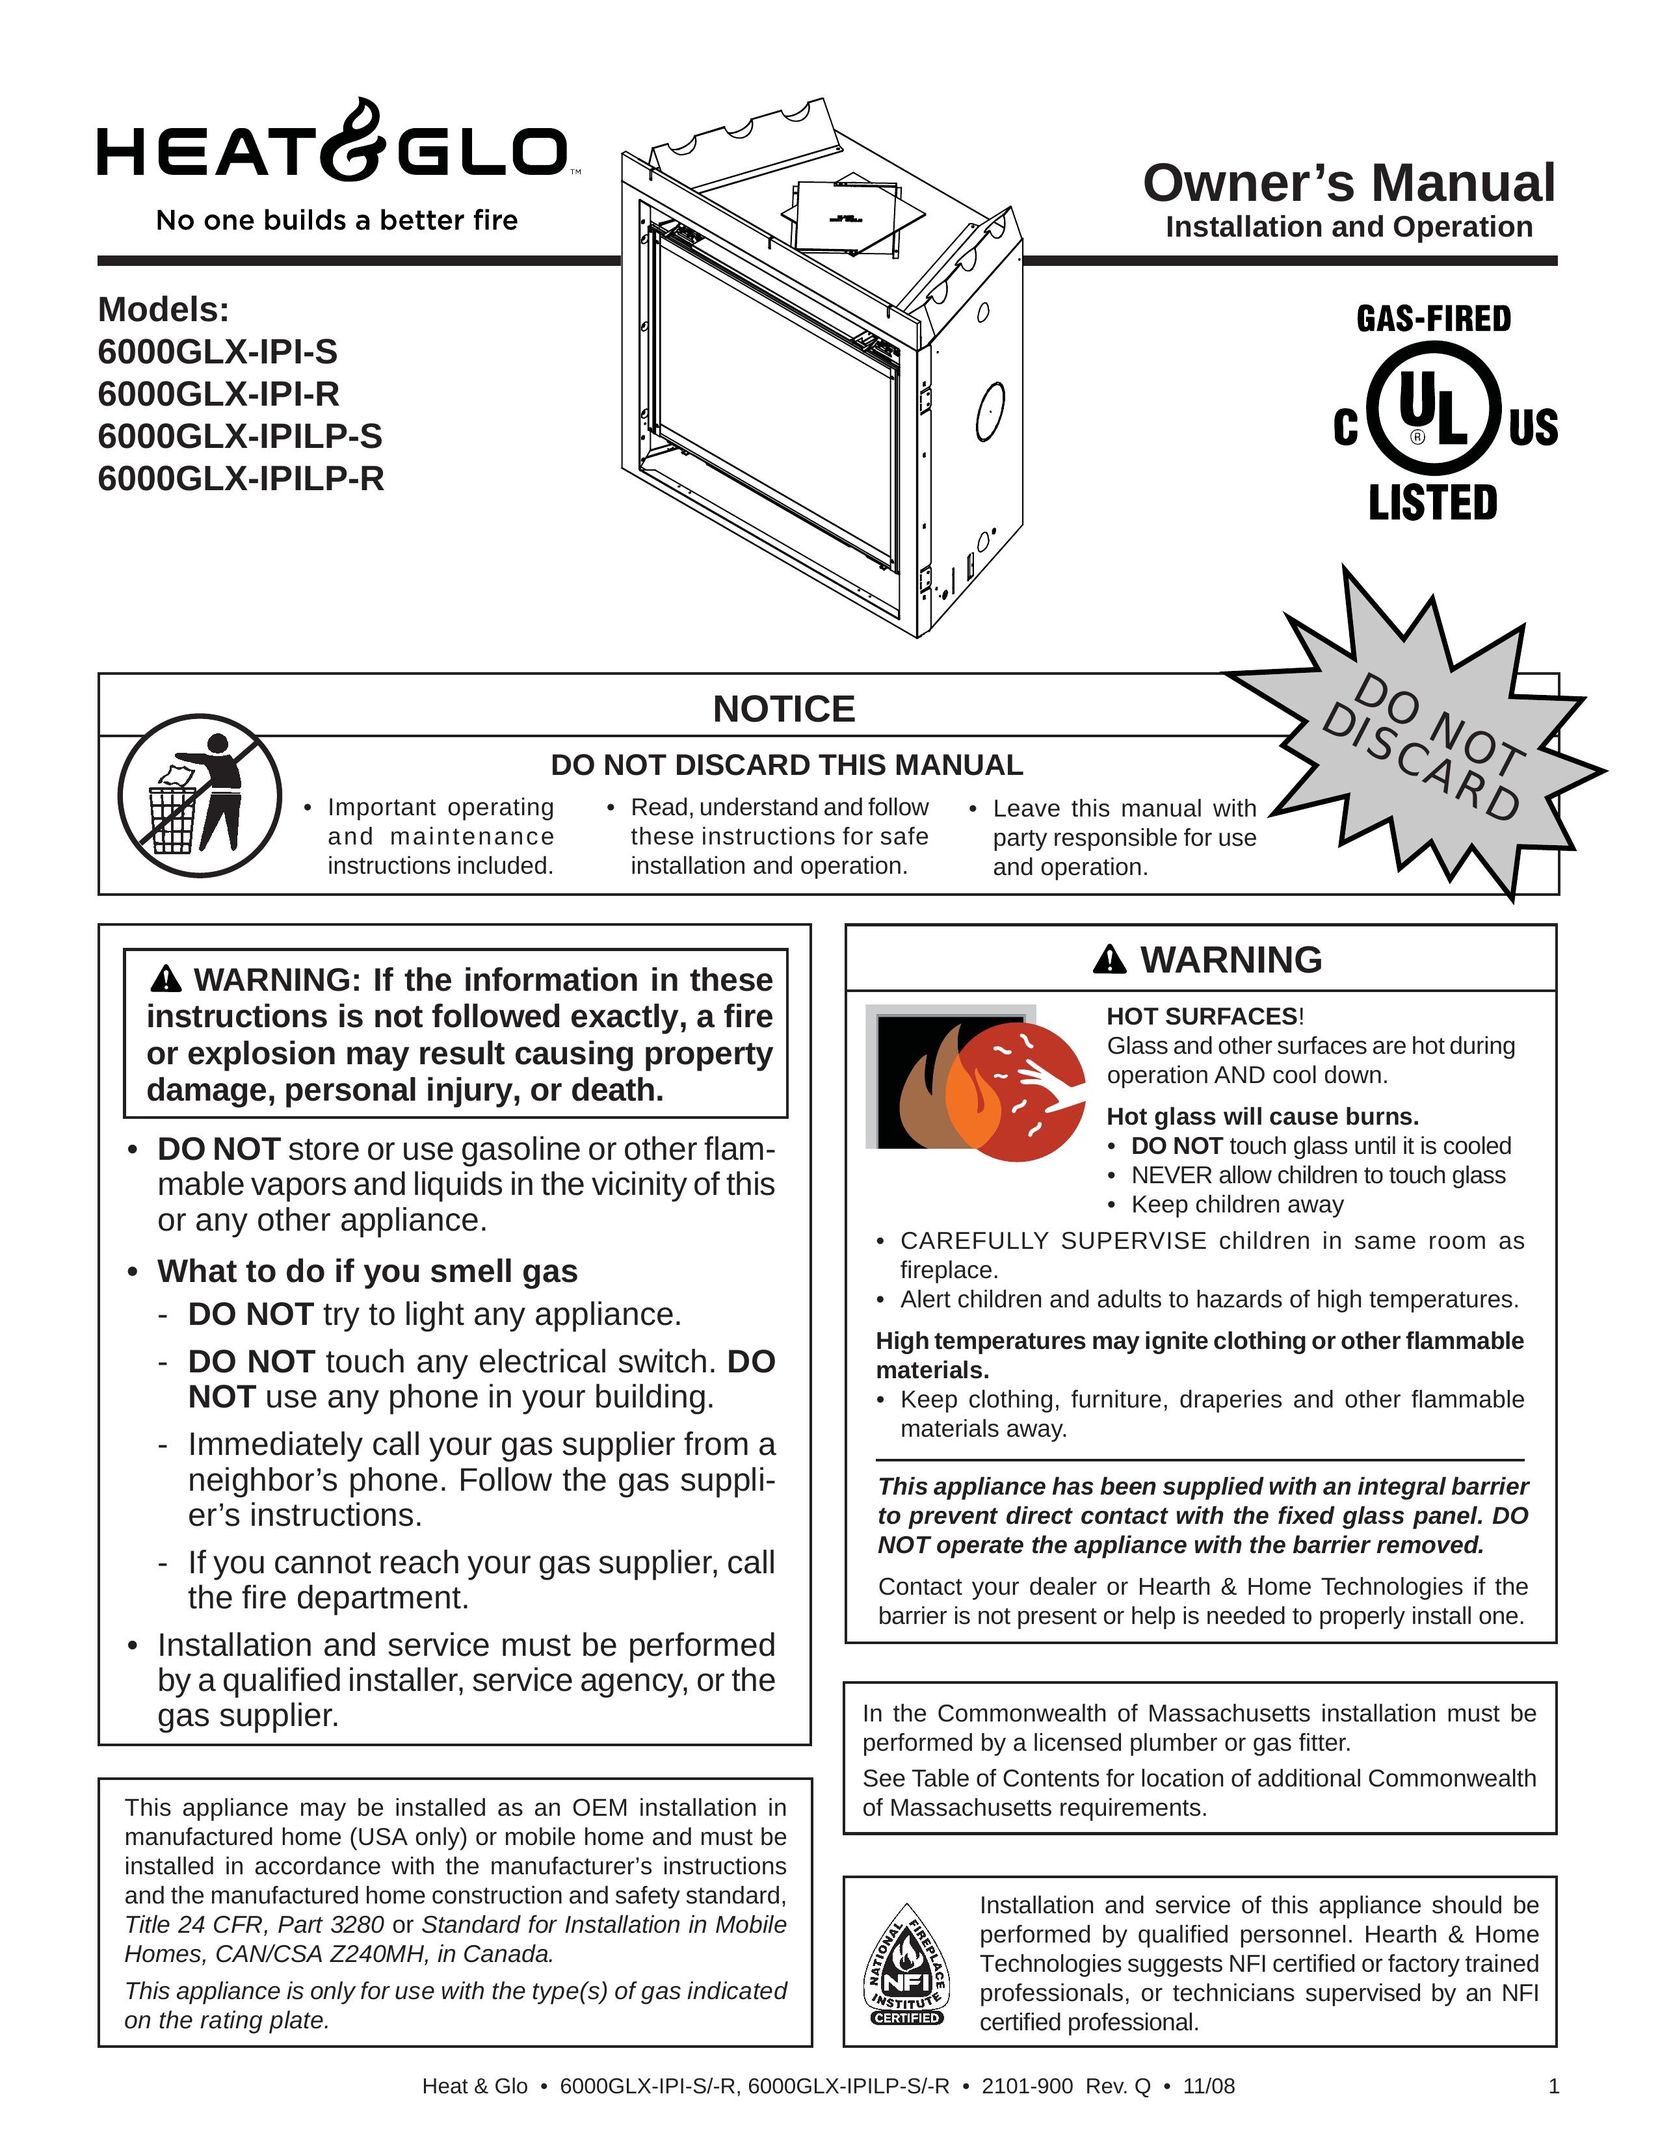 Heat & Glo LifeStyle 6000GLX-IPILP-S/-R Indoor Fireplace User Manual